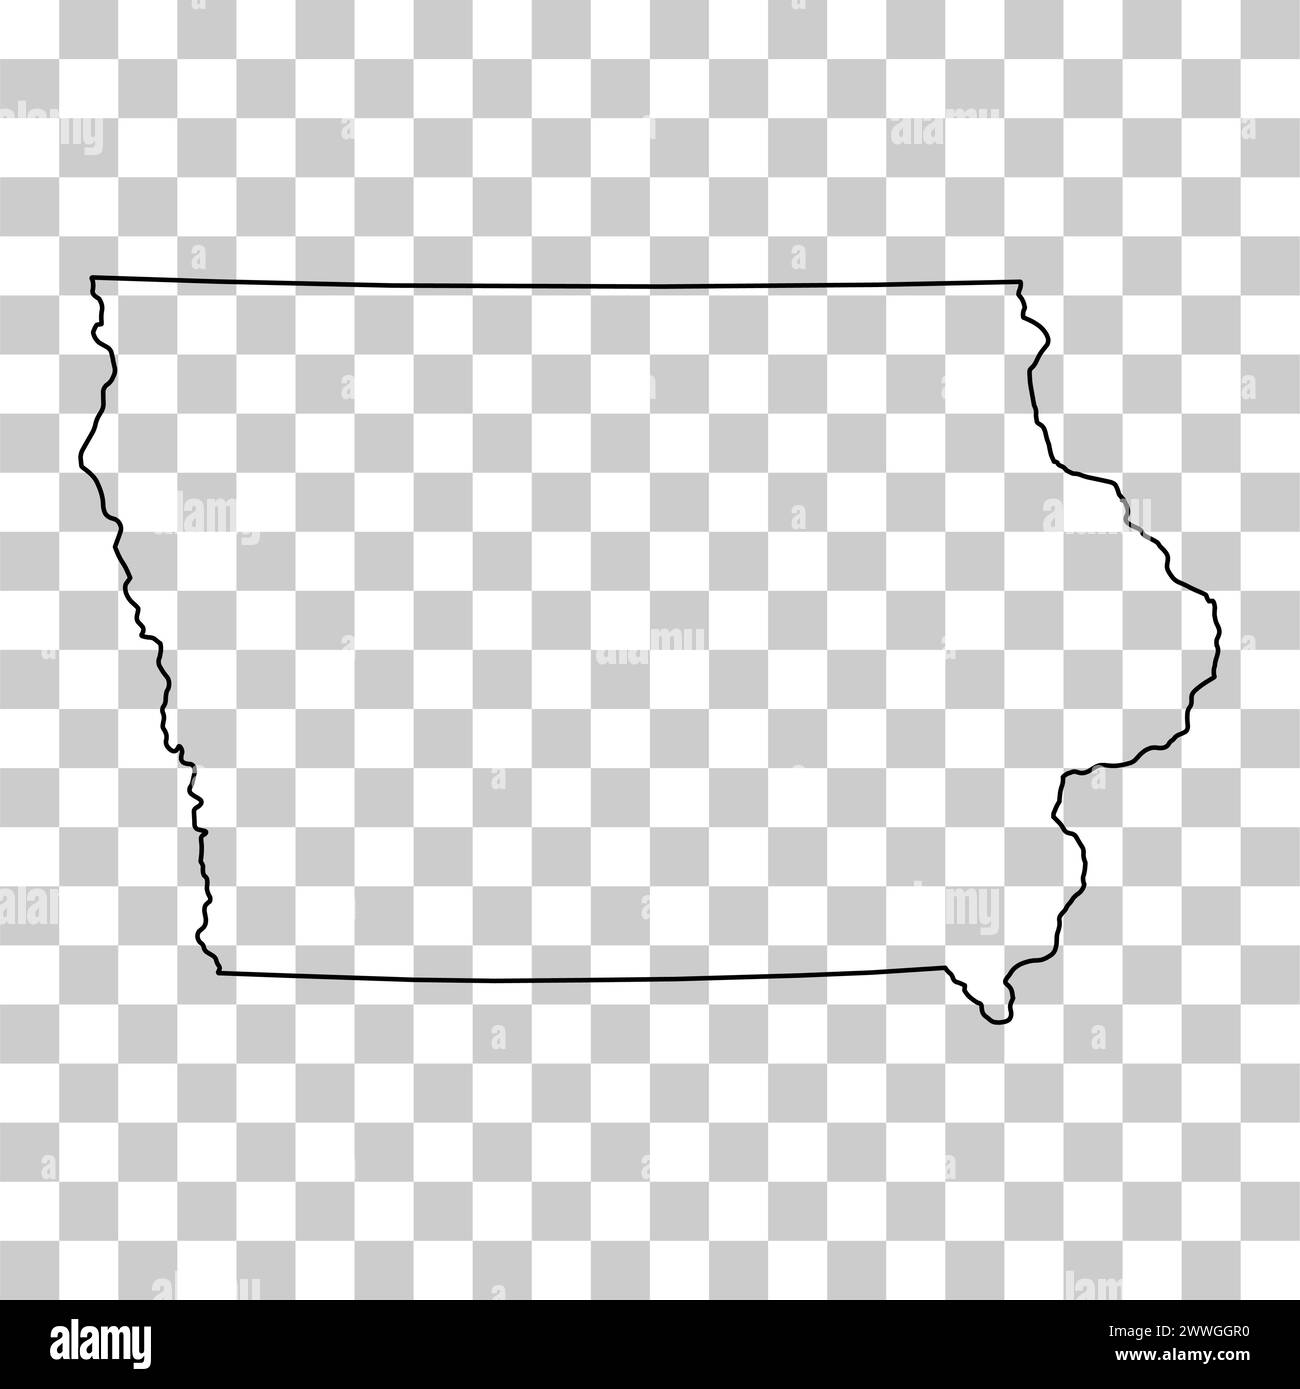 Iowa map shape, united states of america. Flat concept icon symbol vector illustration . Stock Vector